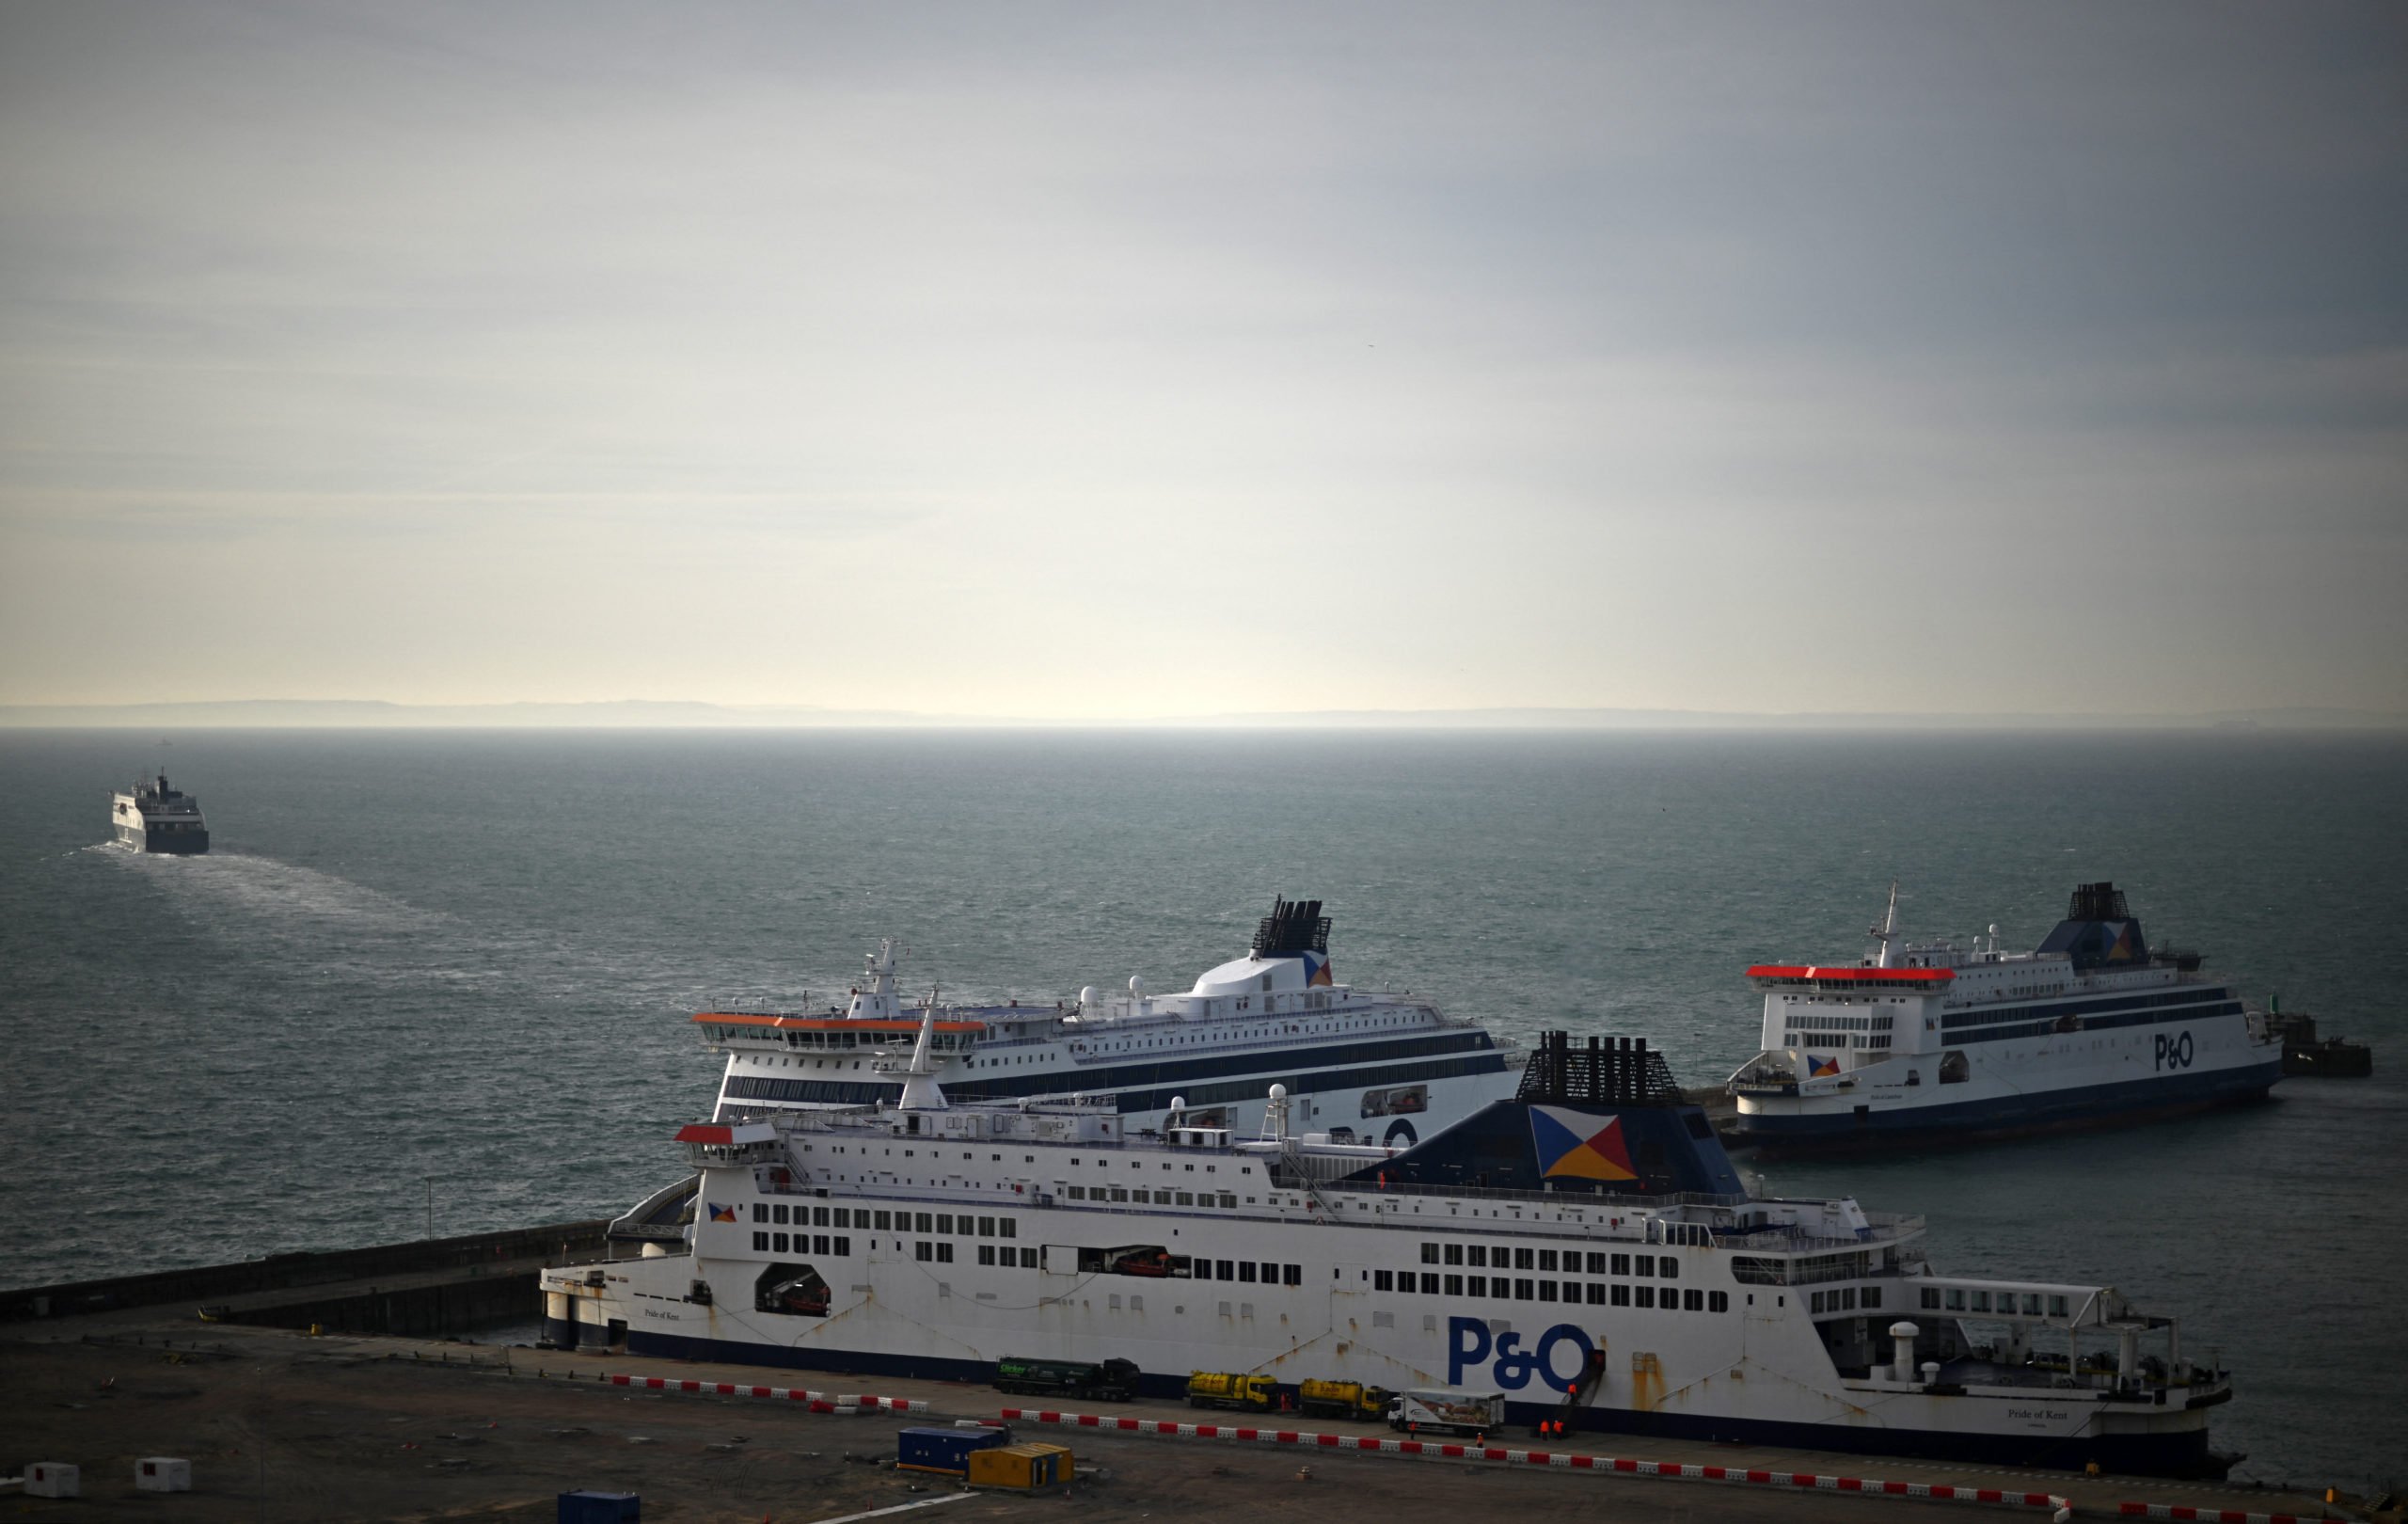 La décision de la compagnie de ferry P&O de licencier 800 employés a semé le chaos chez les vacanciers.